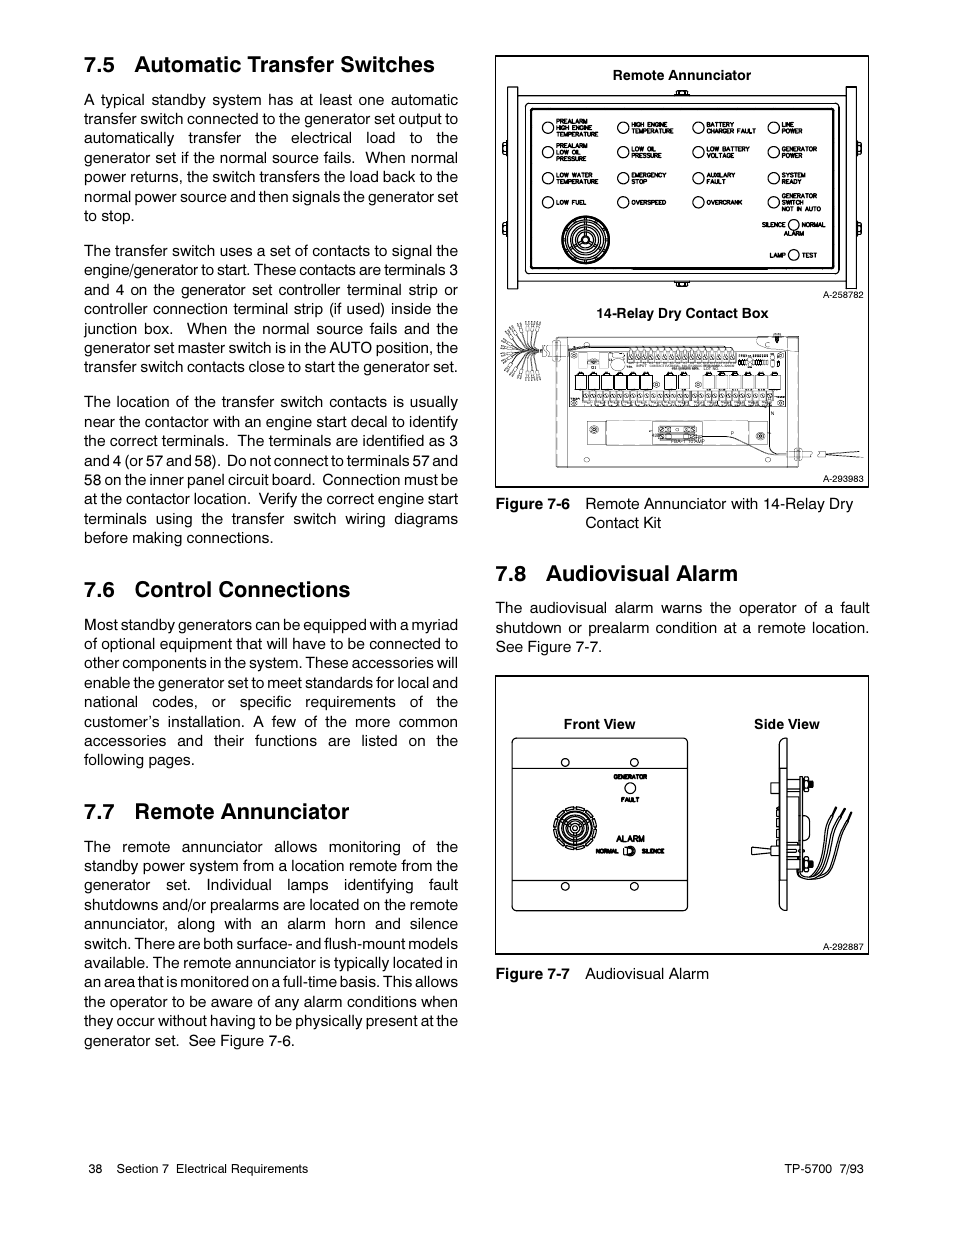 Kohler Gen Set Model 4gm21 Wiring Diagram kohler 20kw generator wiring diagram 